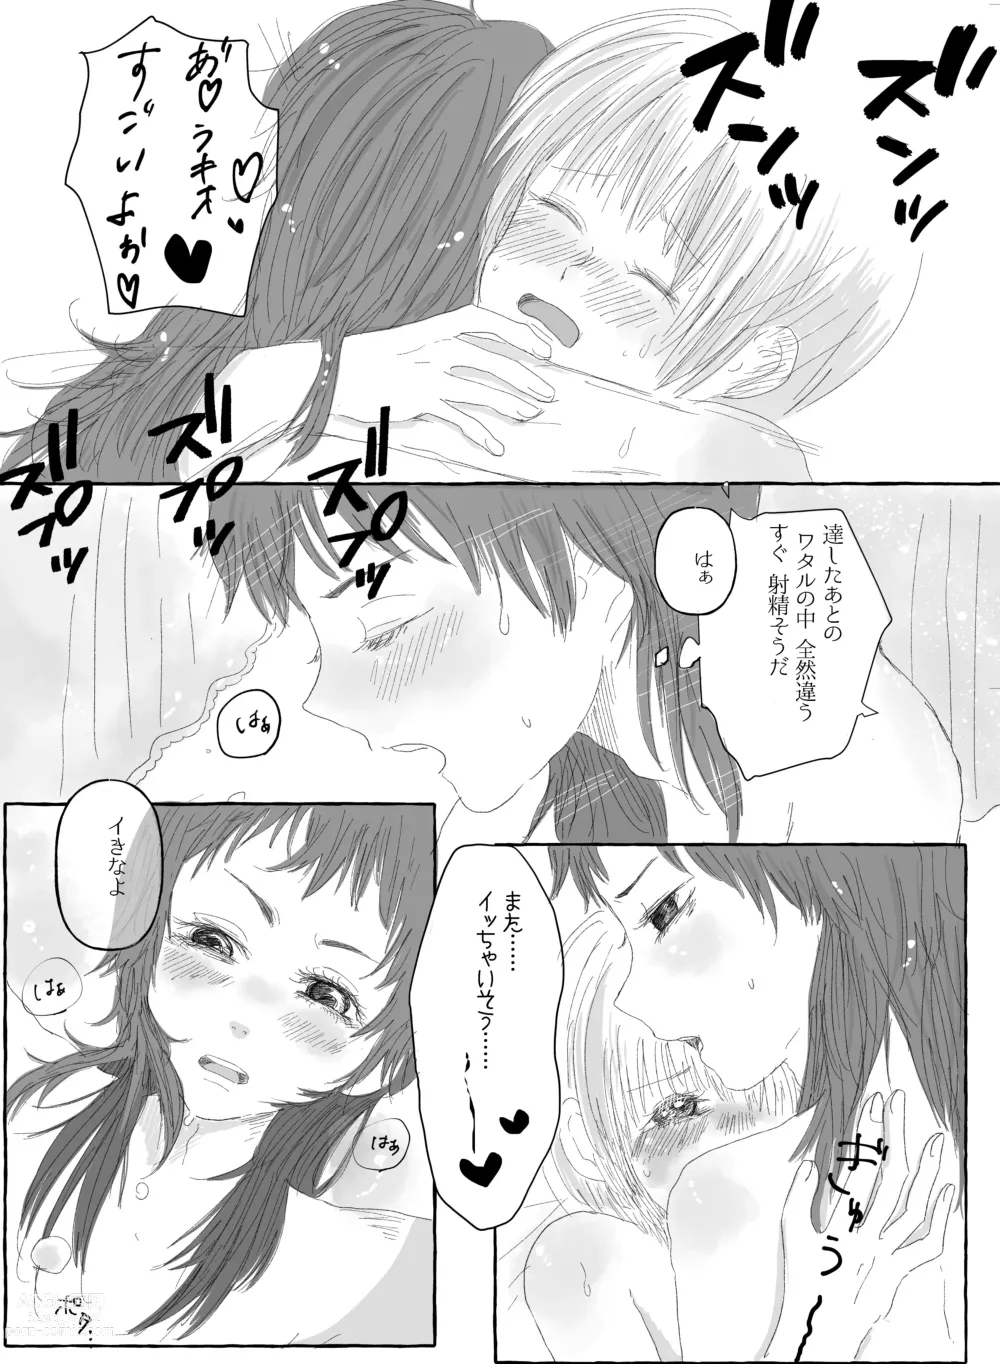 Page 13 of doujinshi Raki Shu Ero Manga